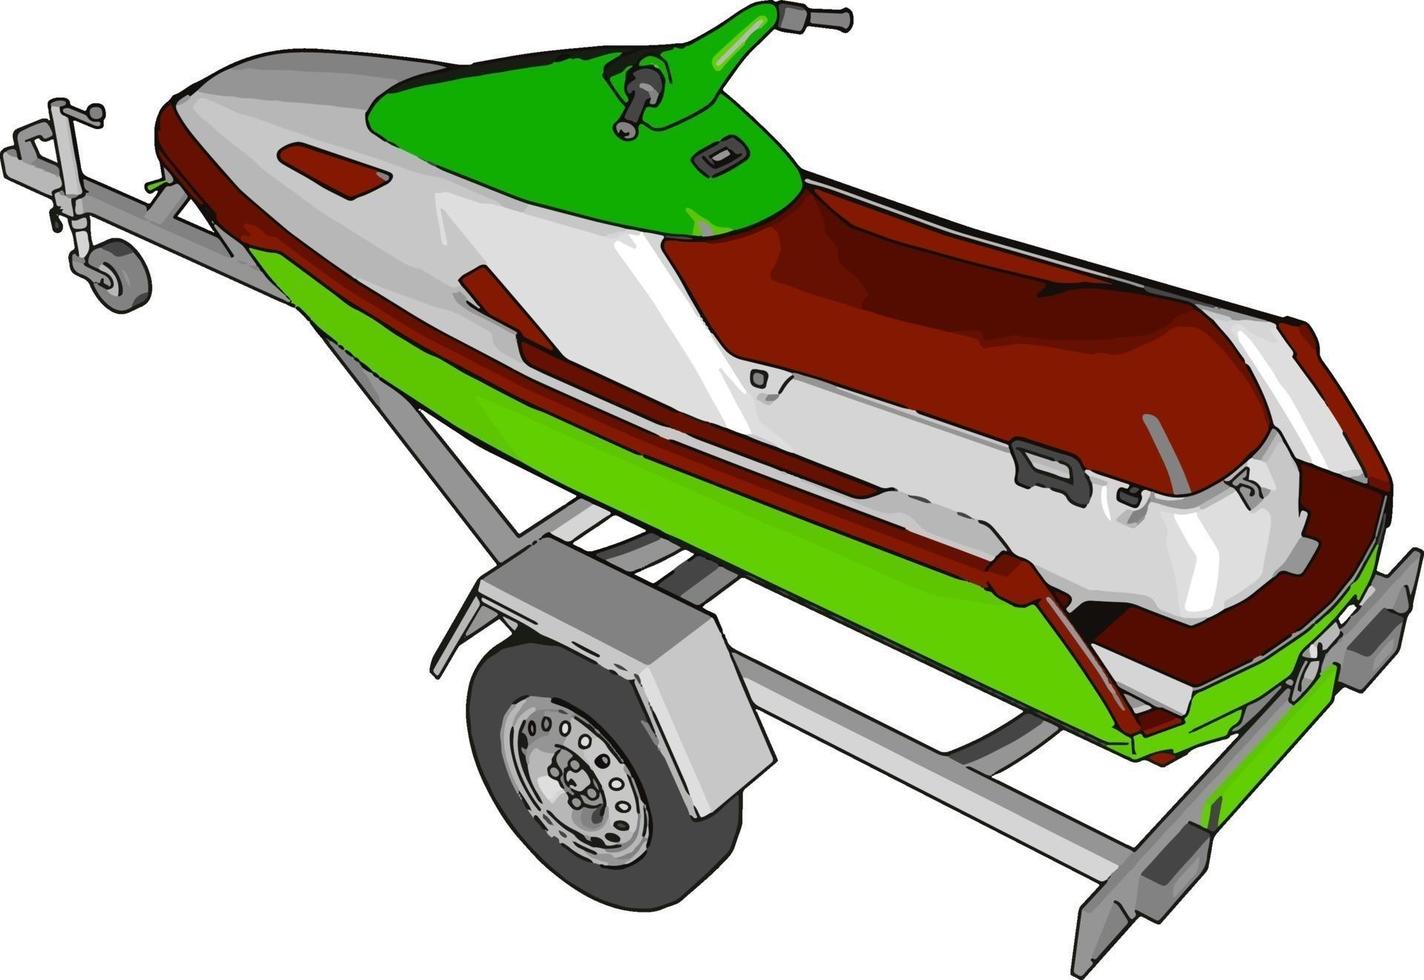 grön Jet ski, illustration, vektor på vit bakgrund.